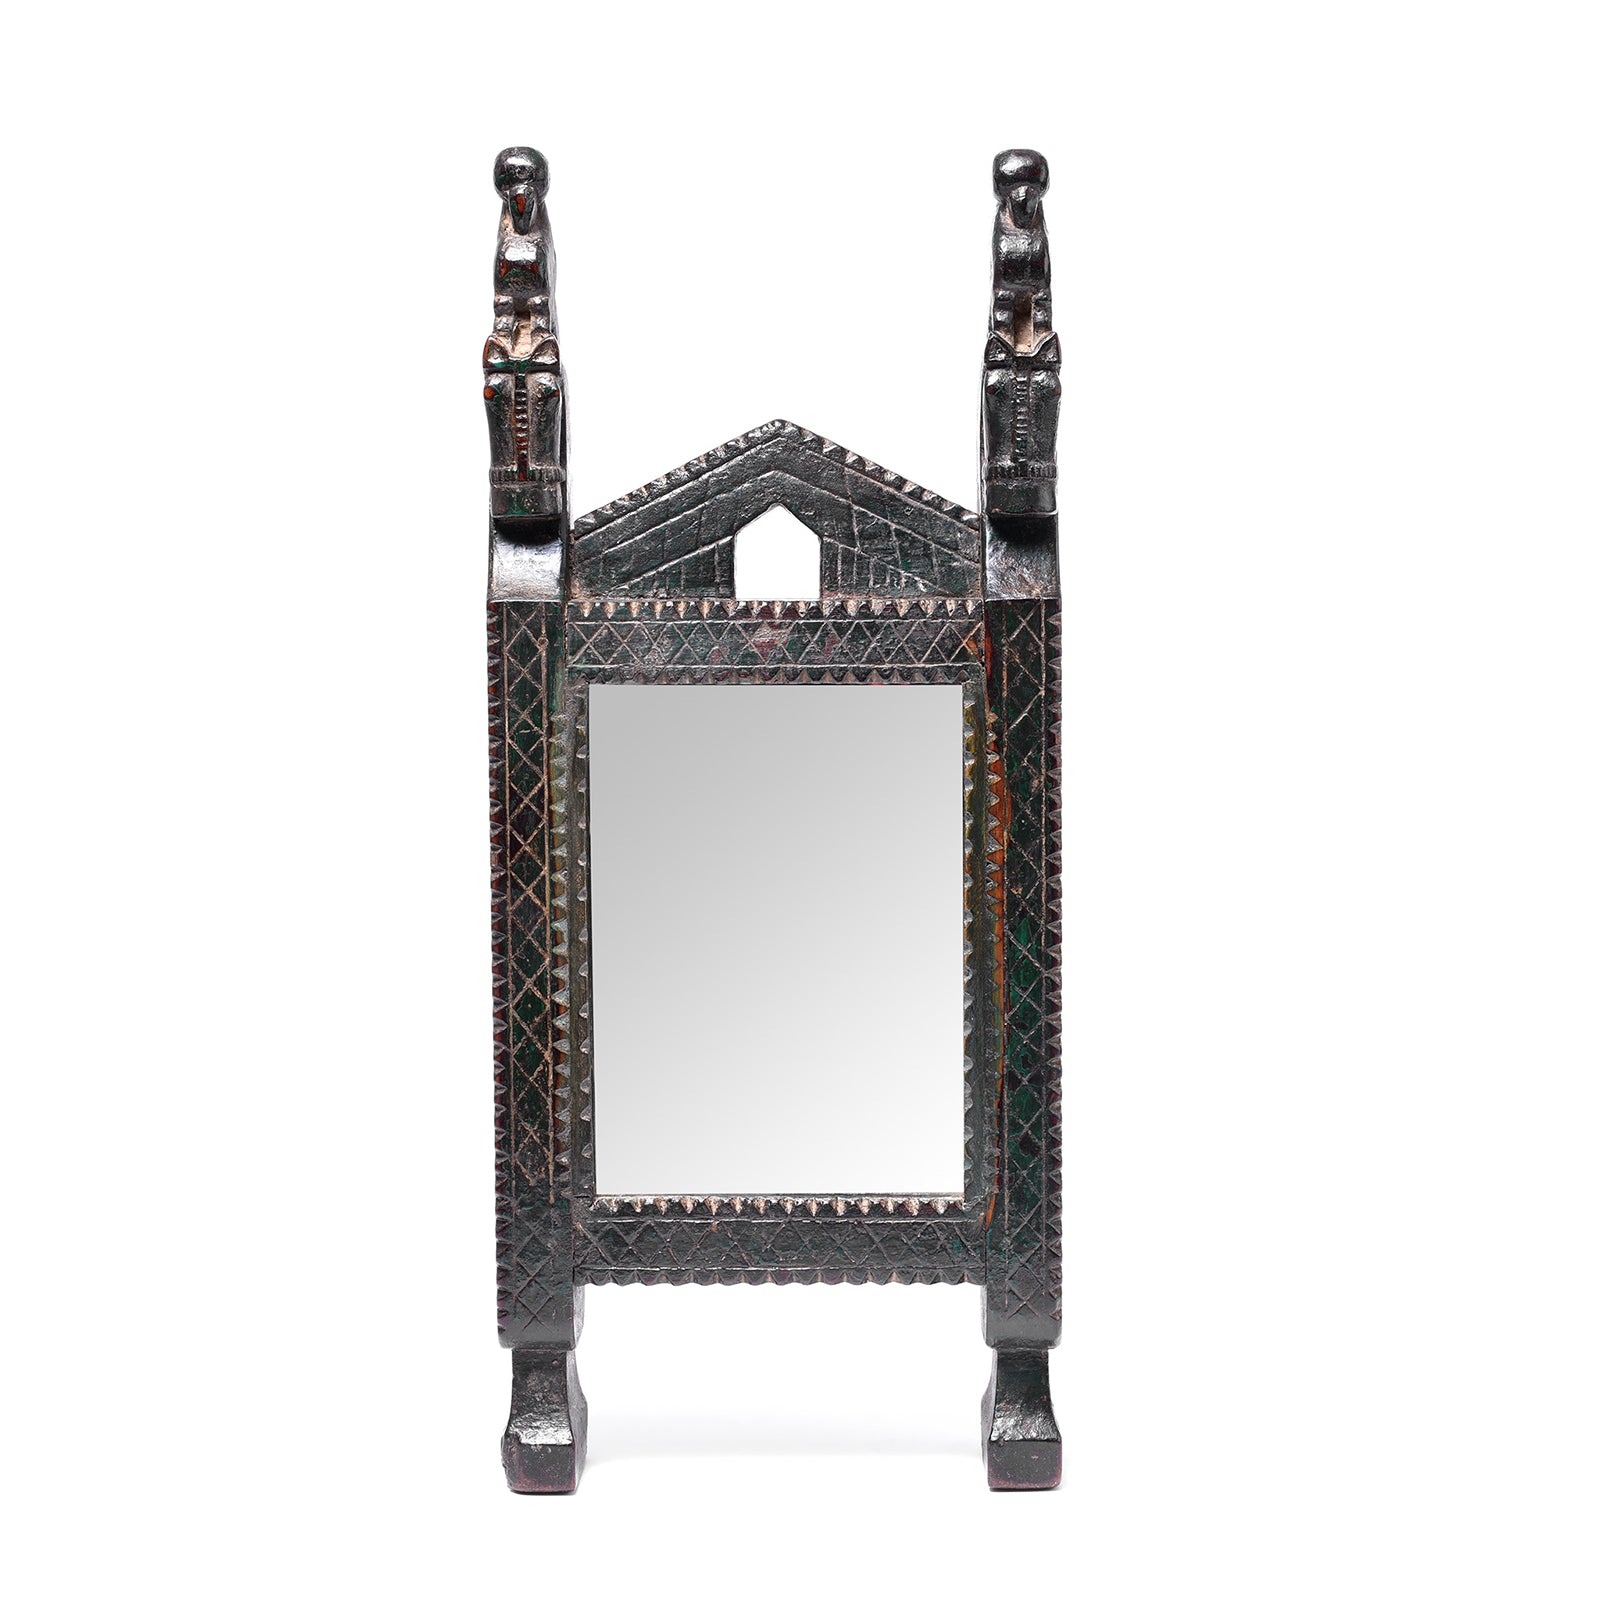 Antique Carved Teak Mirror From The Banswara Tribal Region - 19th Century | Indigo Antiques